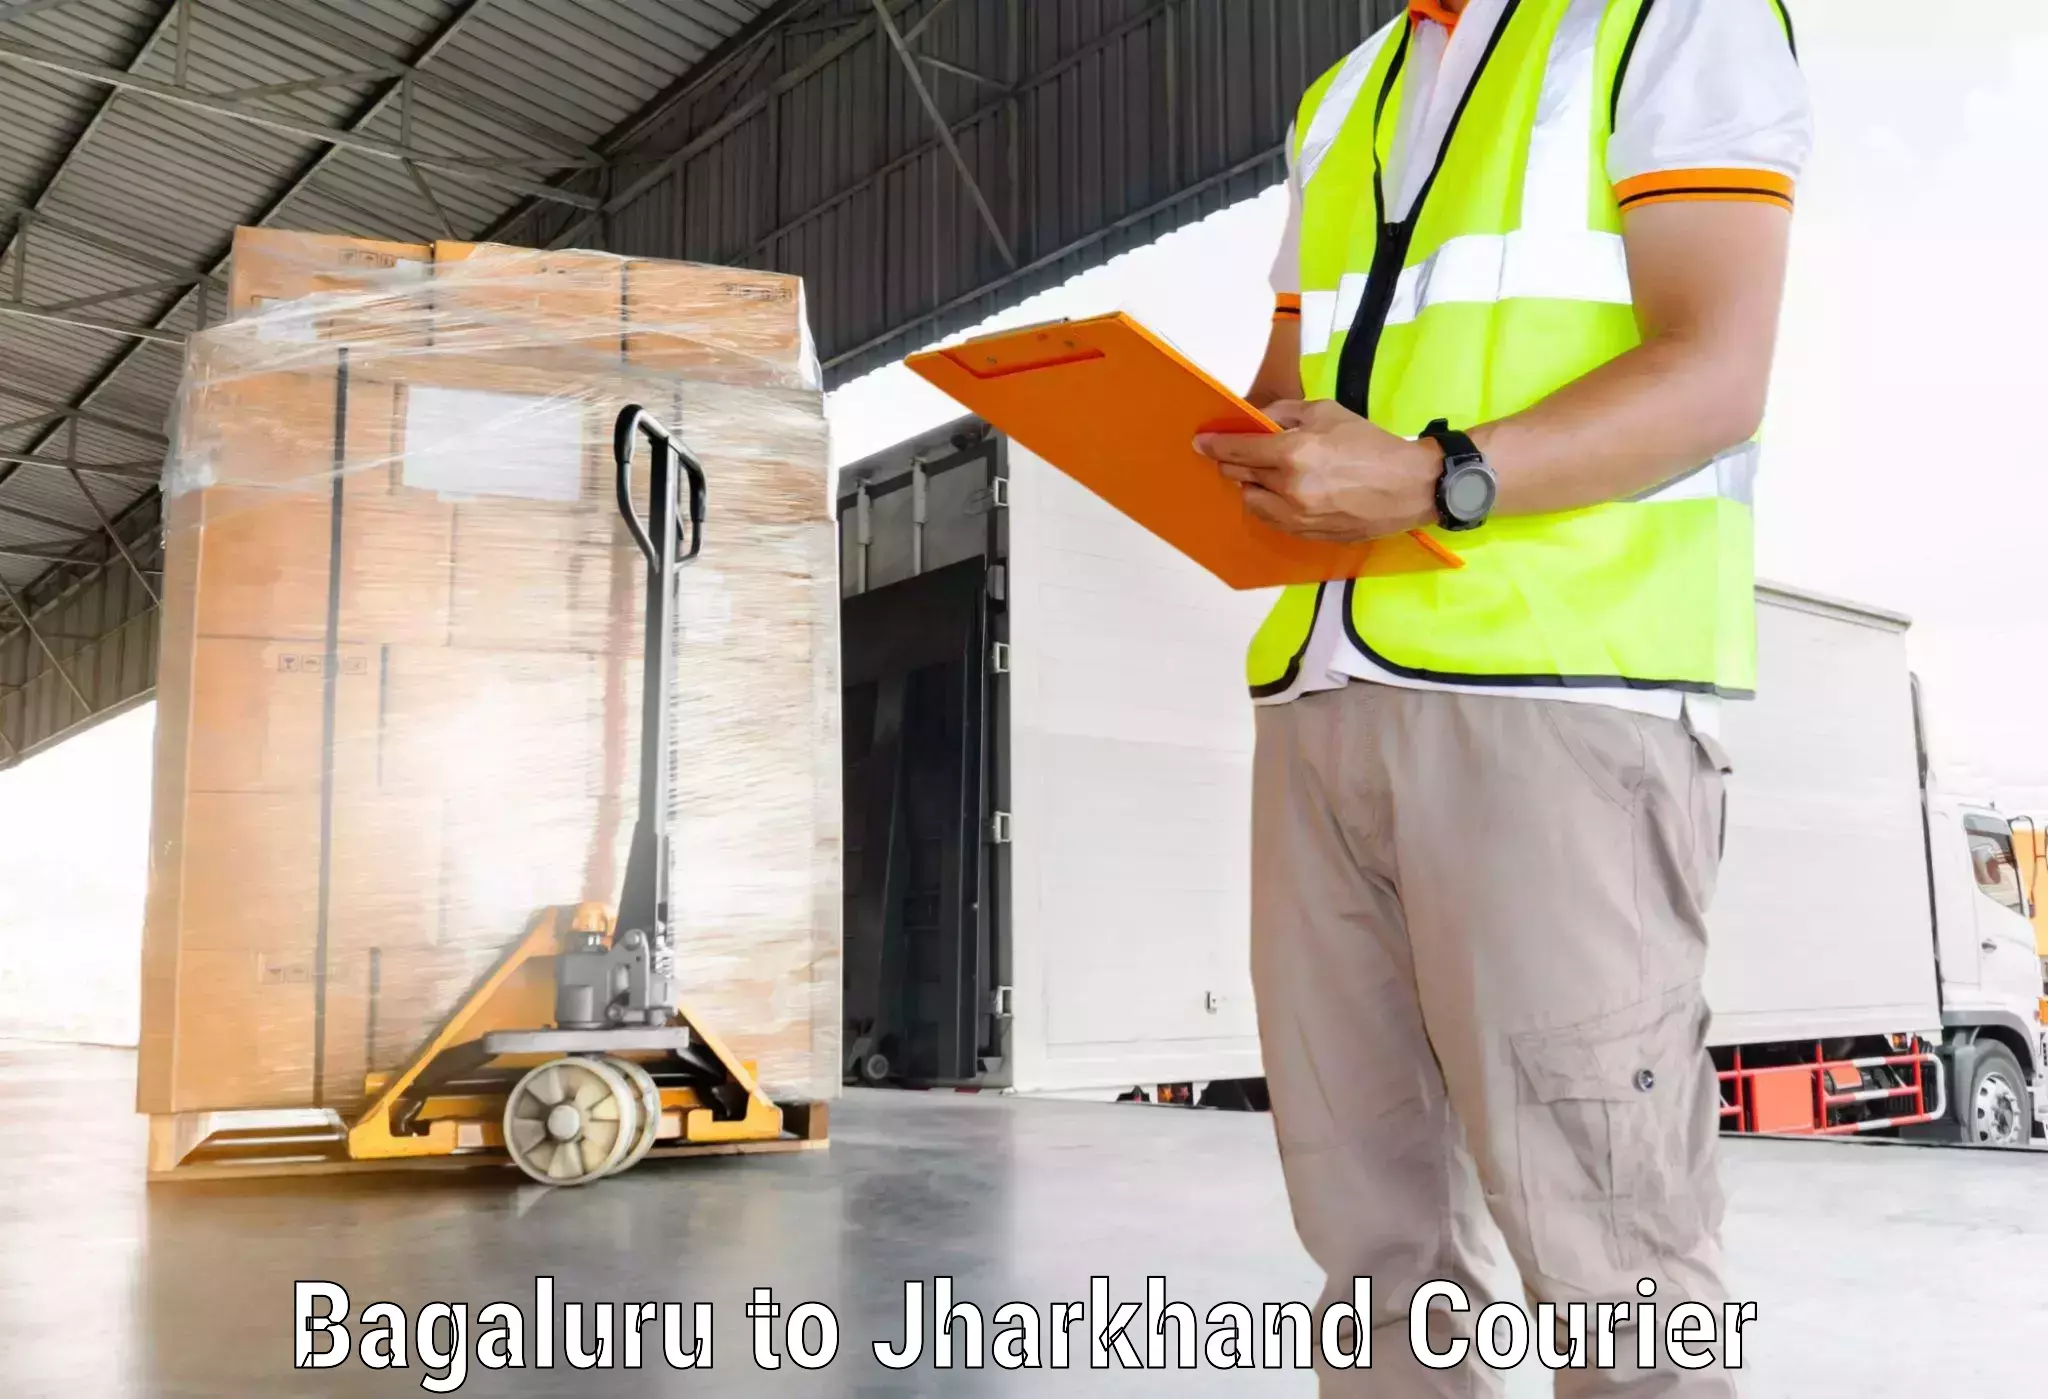 Business shipping needs in Bagaluru to IIIT Ranchi